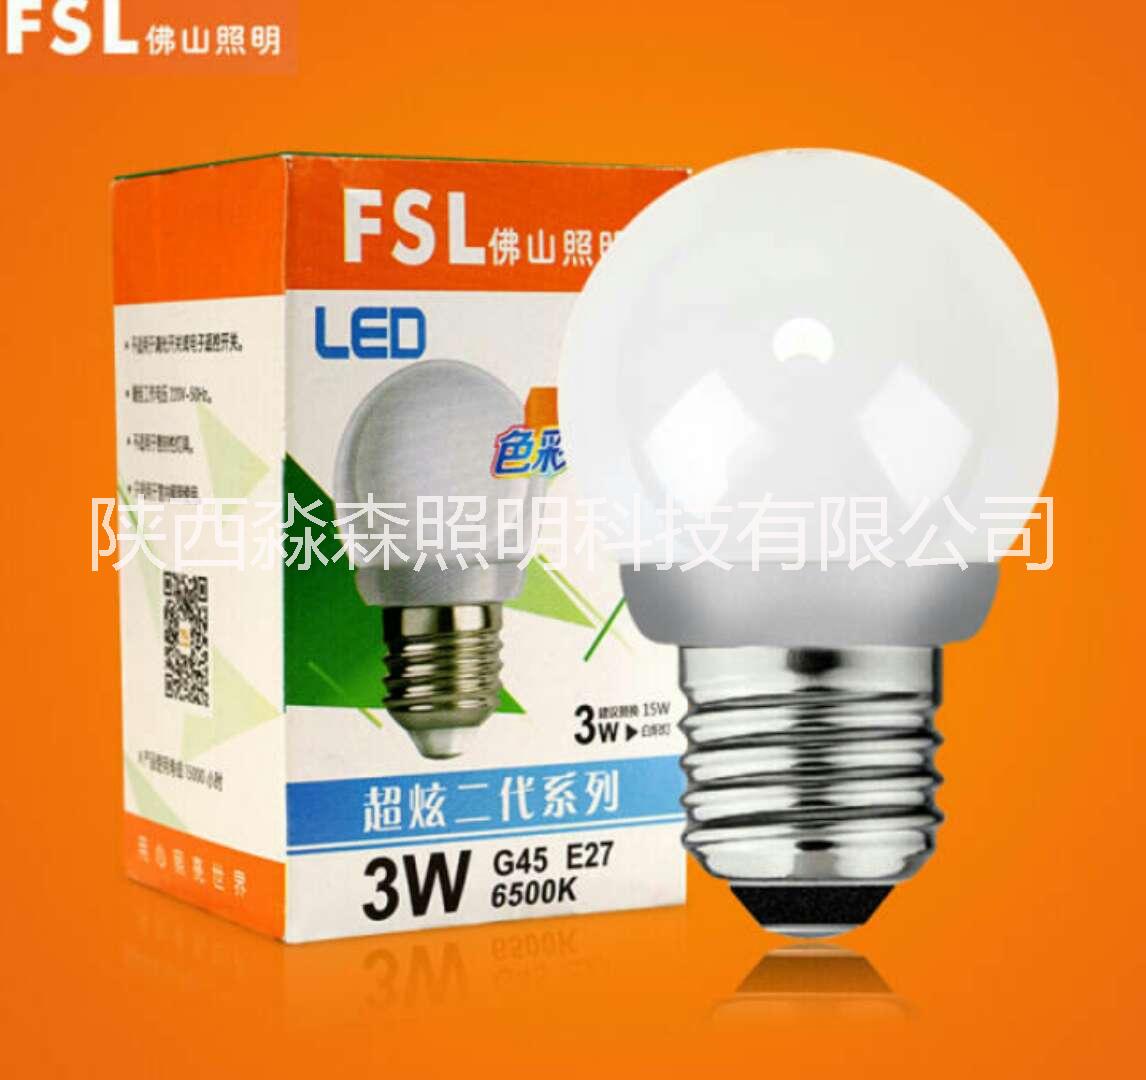 LED灯，照明灯，吸顶灯，浴霸，安全出口佛山照明LED3W球泡图片